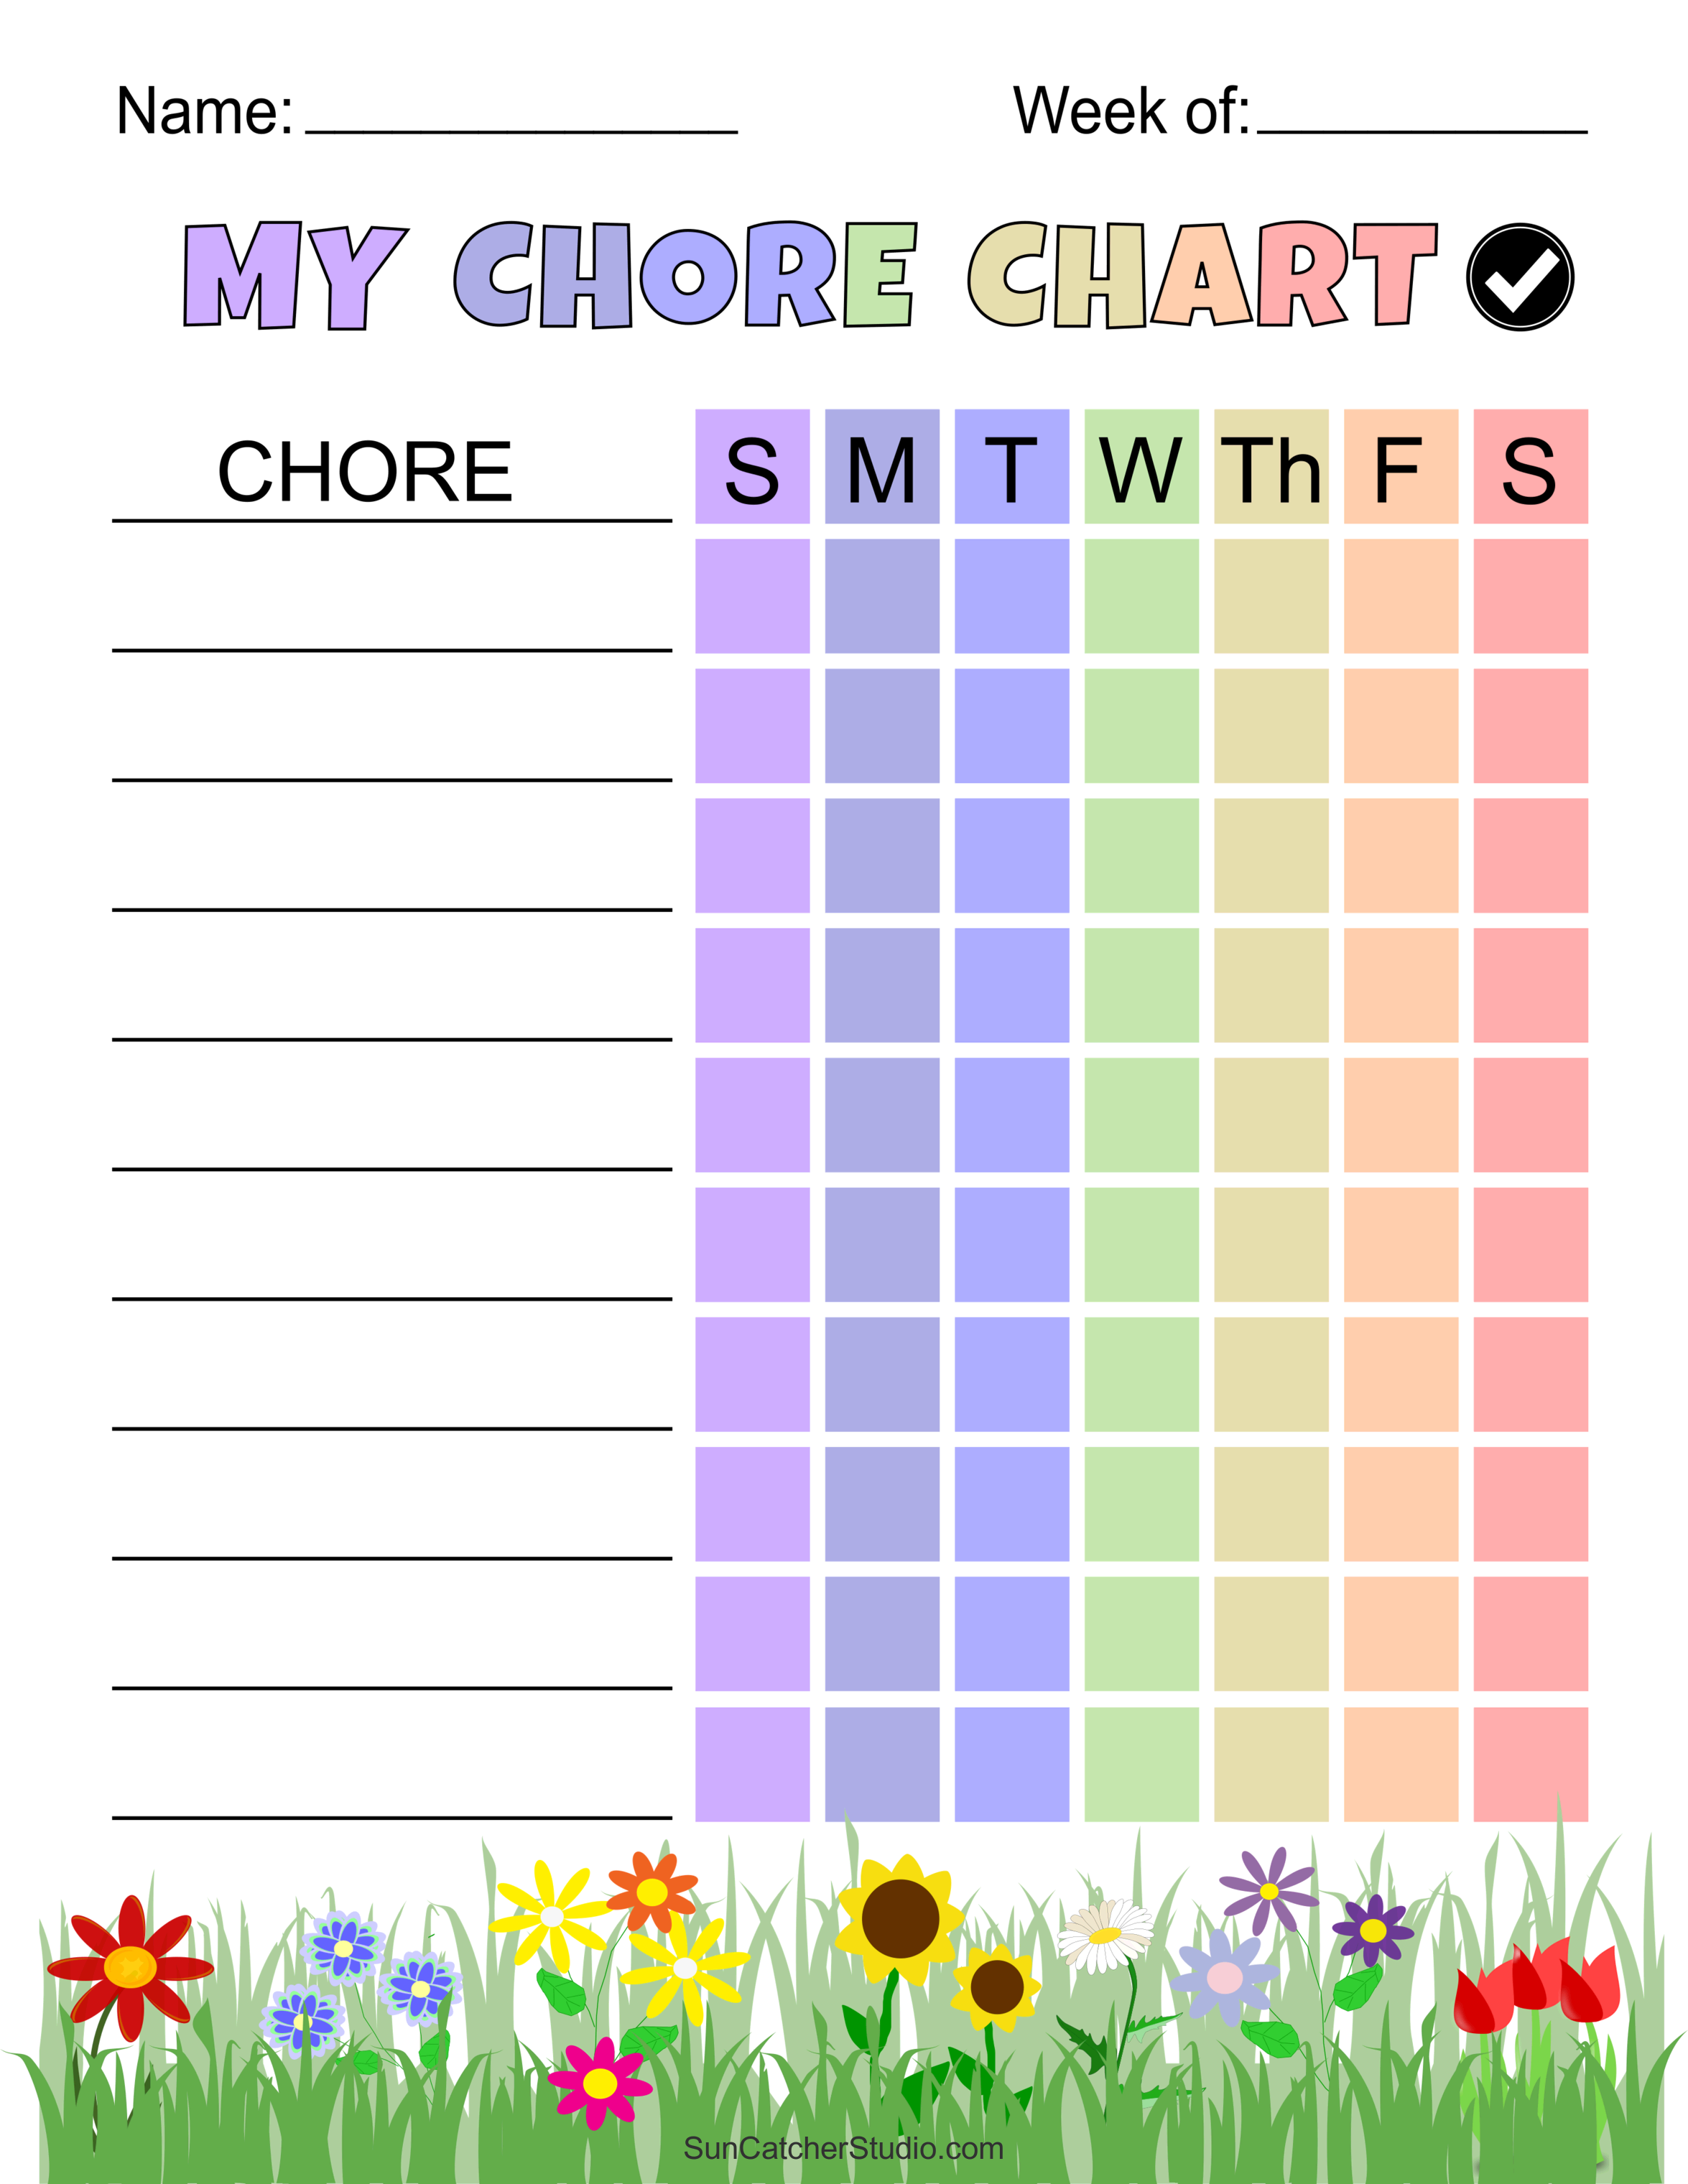 chore-charts-printable-editable-daily-weekly-templates-diy-projects-patterns-monograms